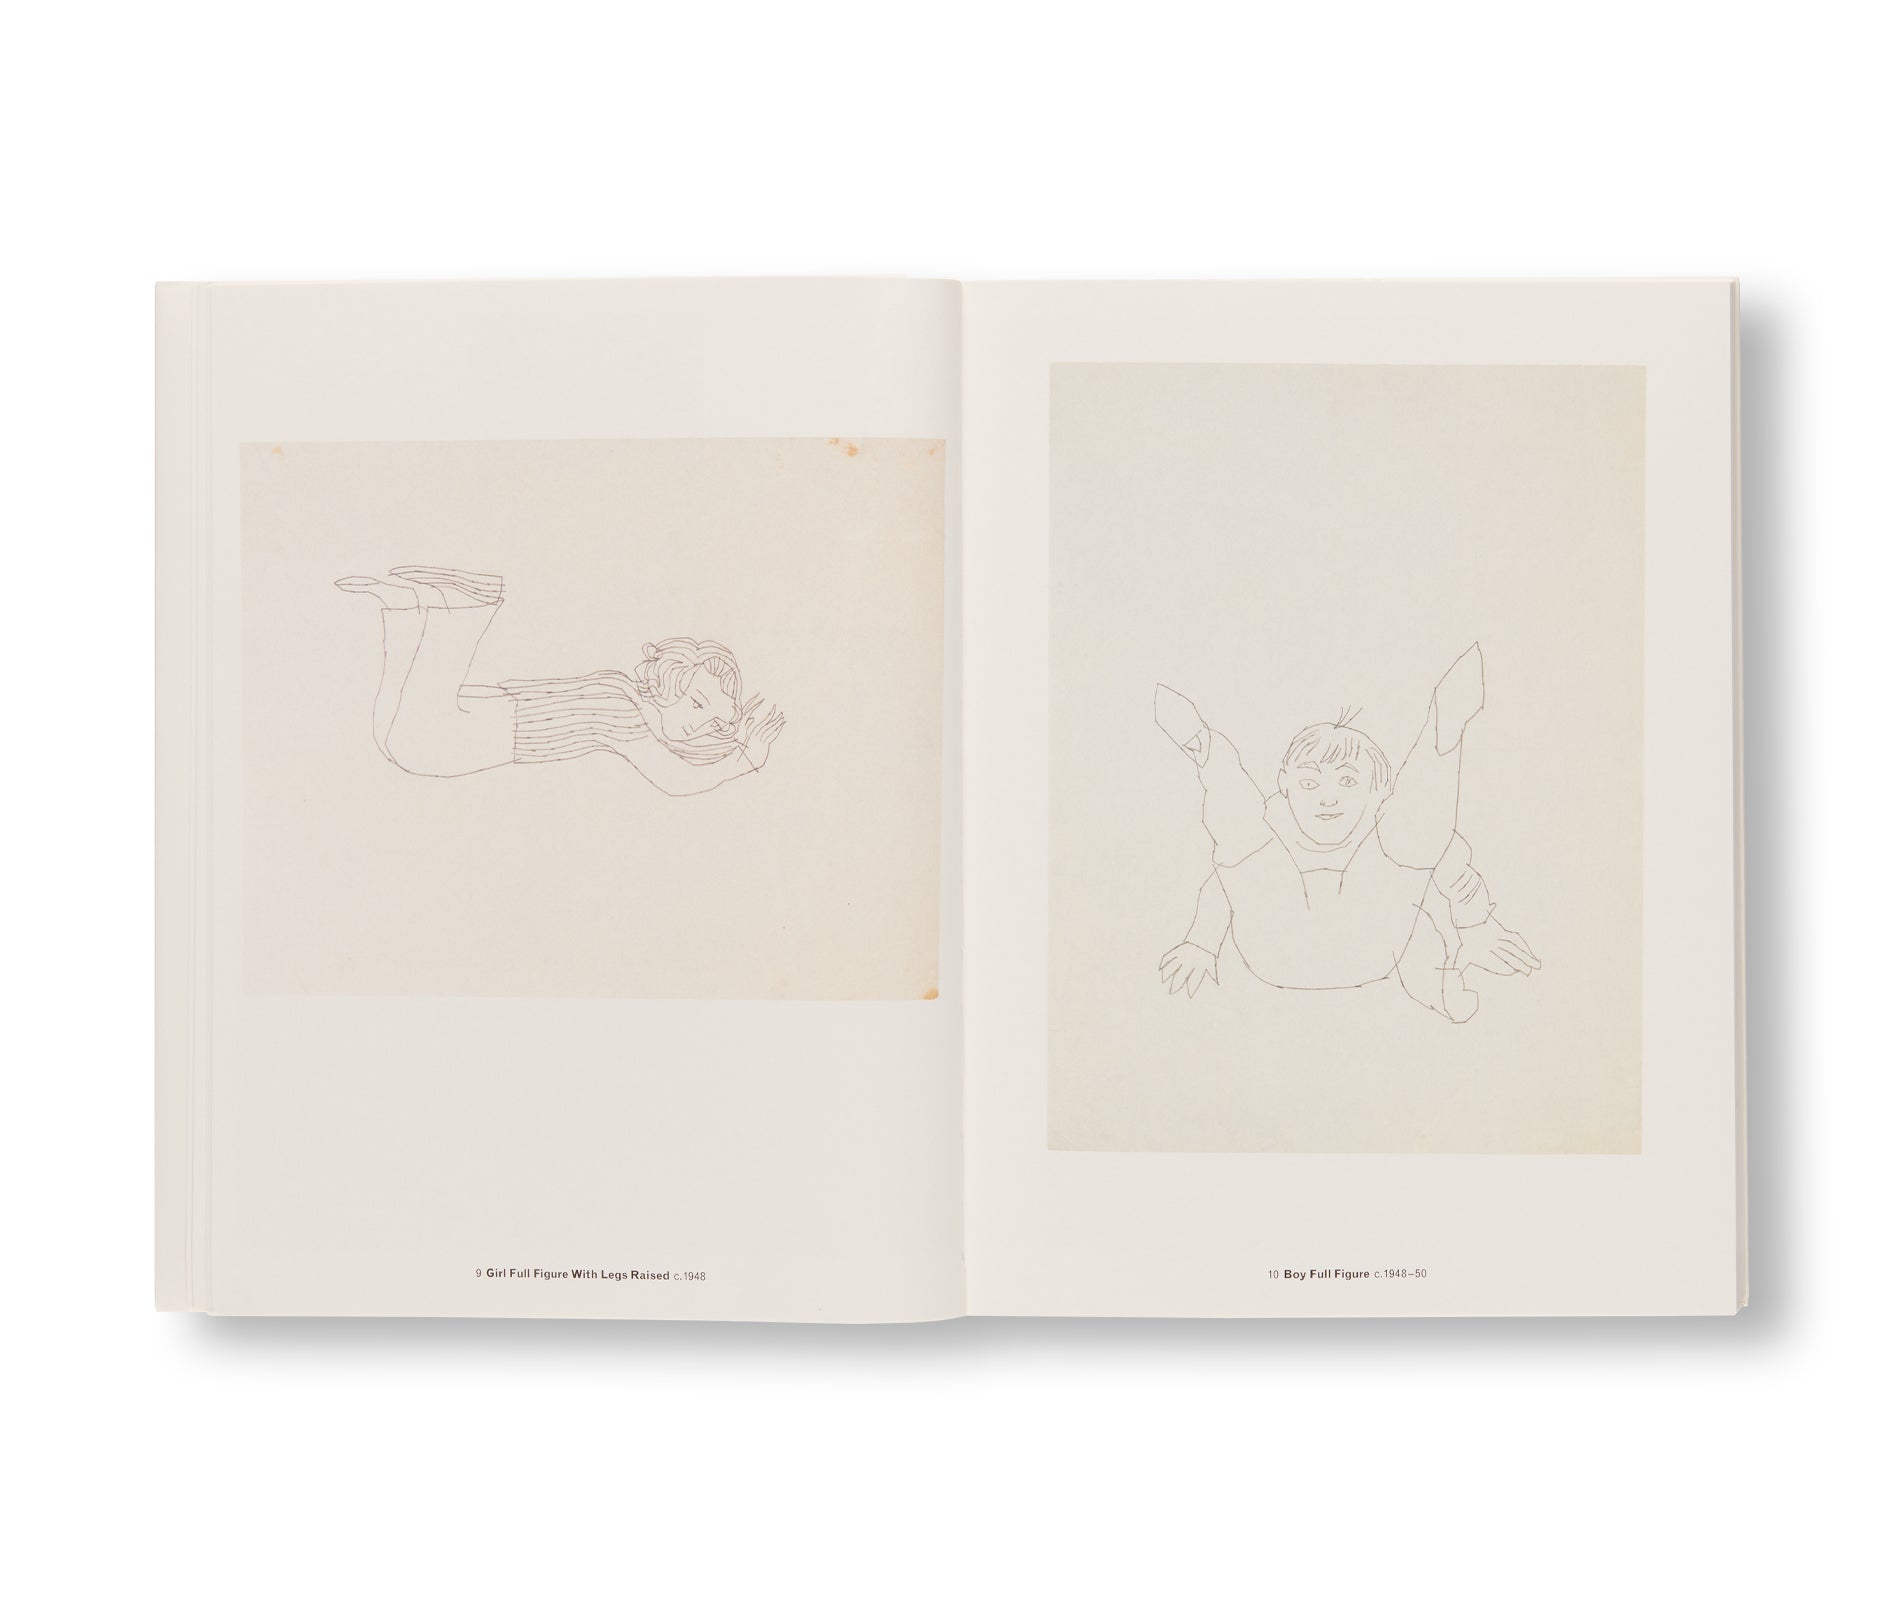 ANDY WARHOL'S SMALL WORLD by Andy Warhol – twelvebooks